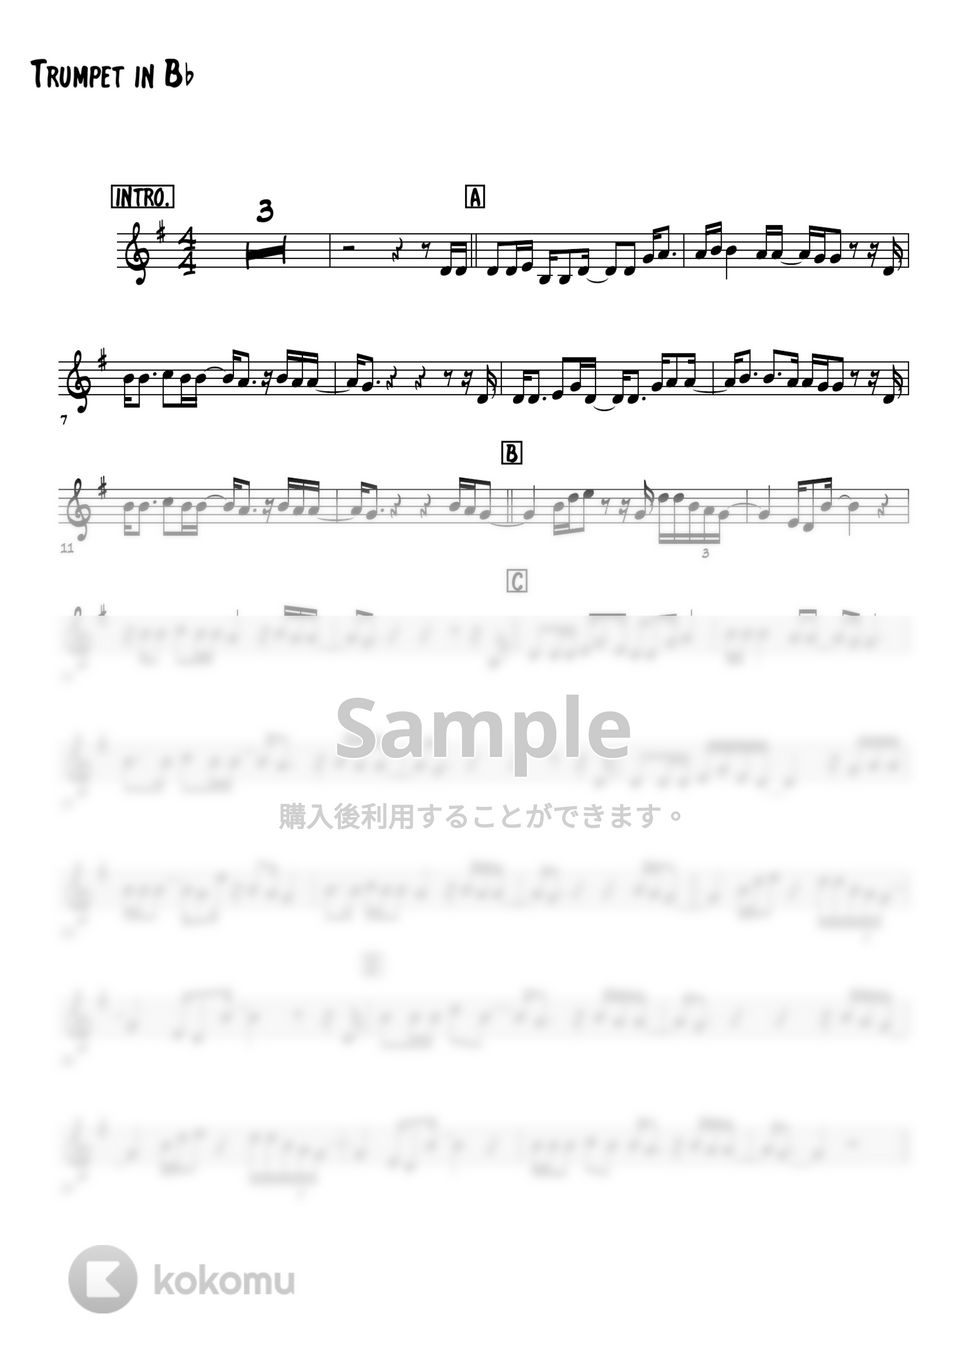 The Beatles - Let It Be (トランペットメロディー楽譜) by 高田将利